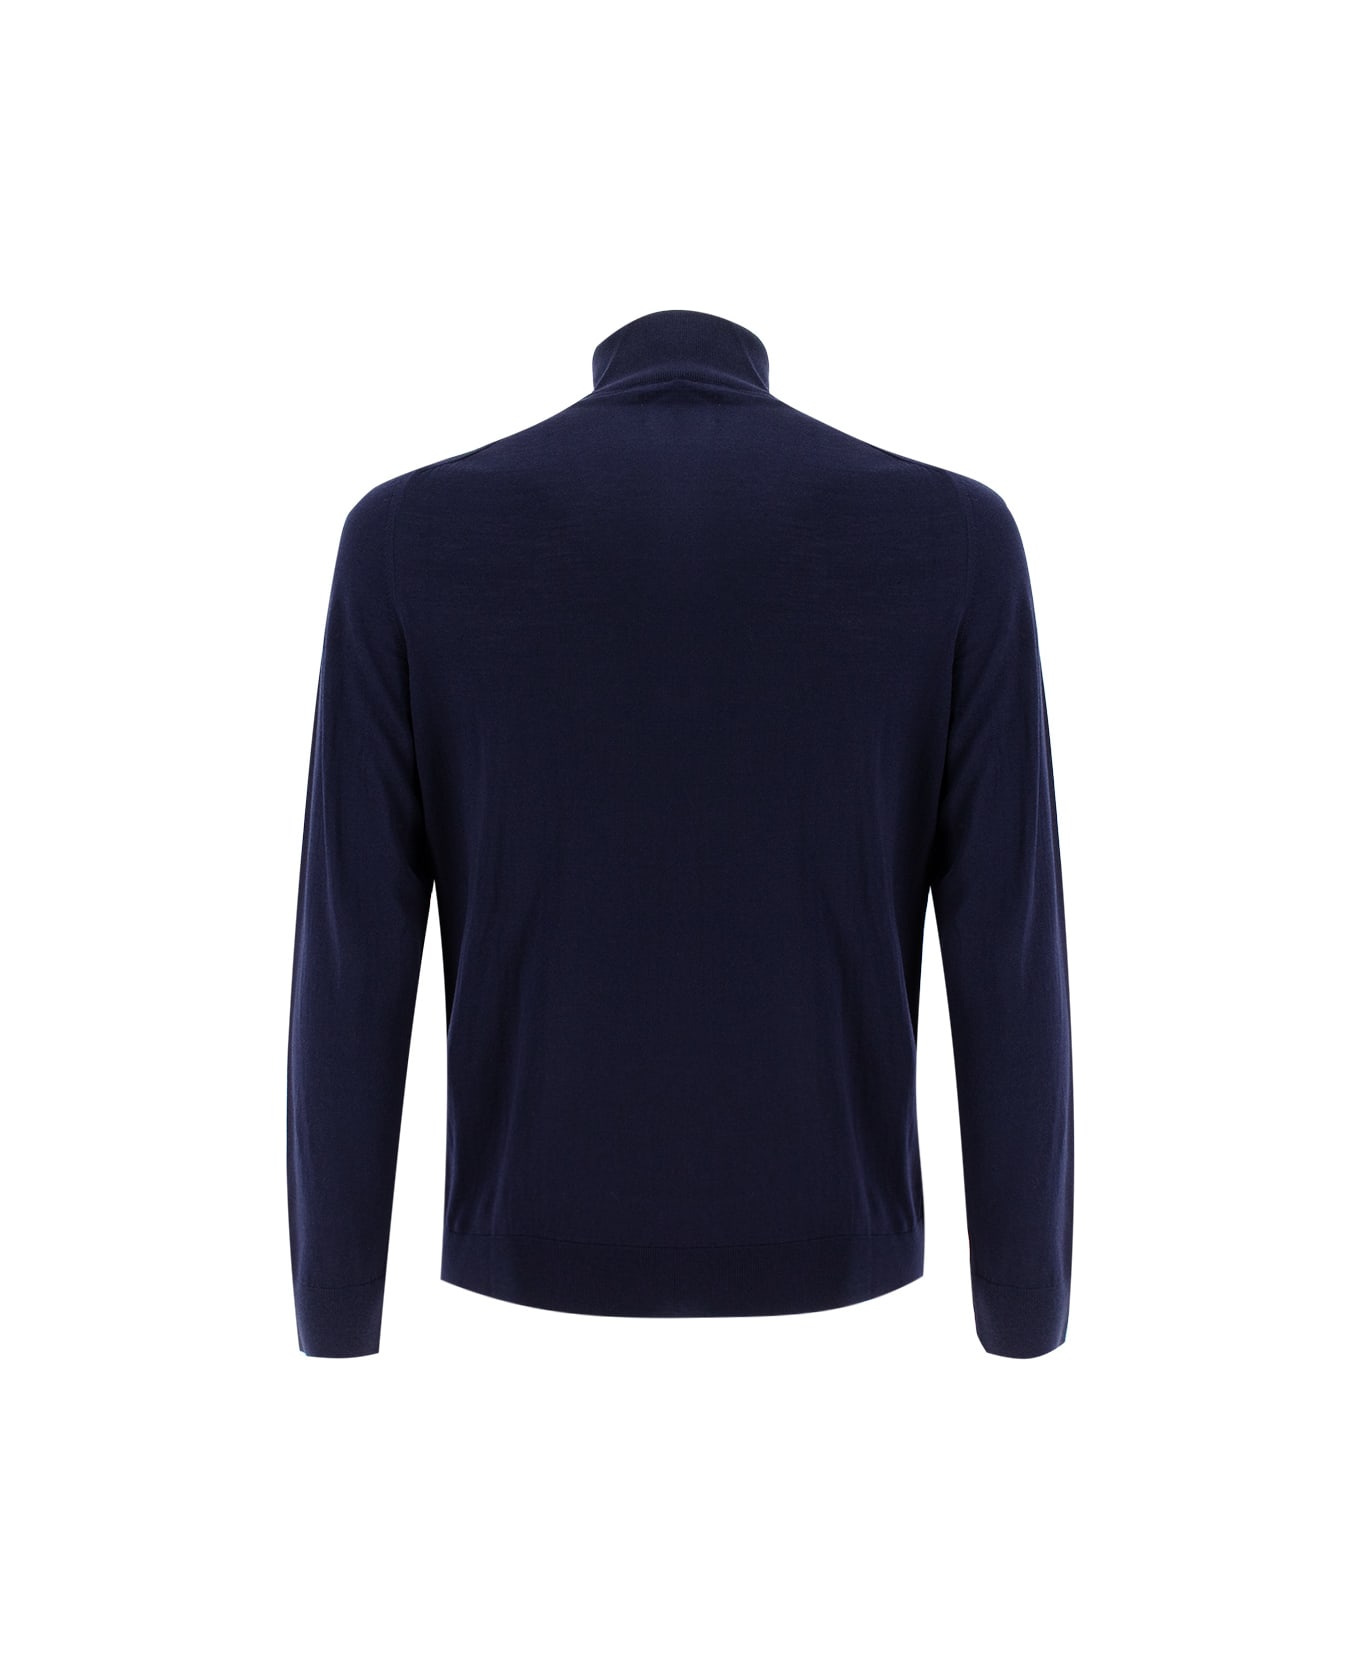 Kiton Sweater - NAVY BLUE